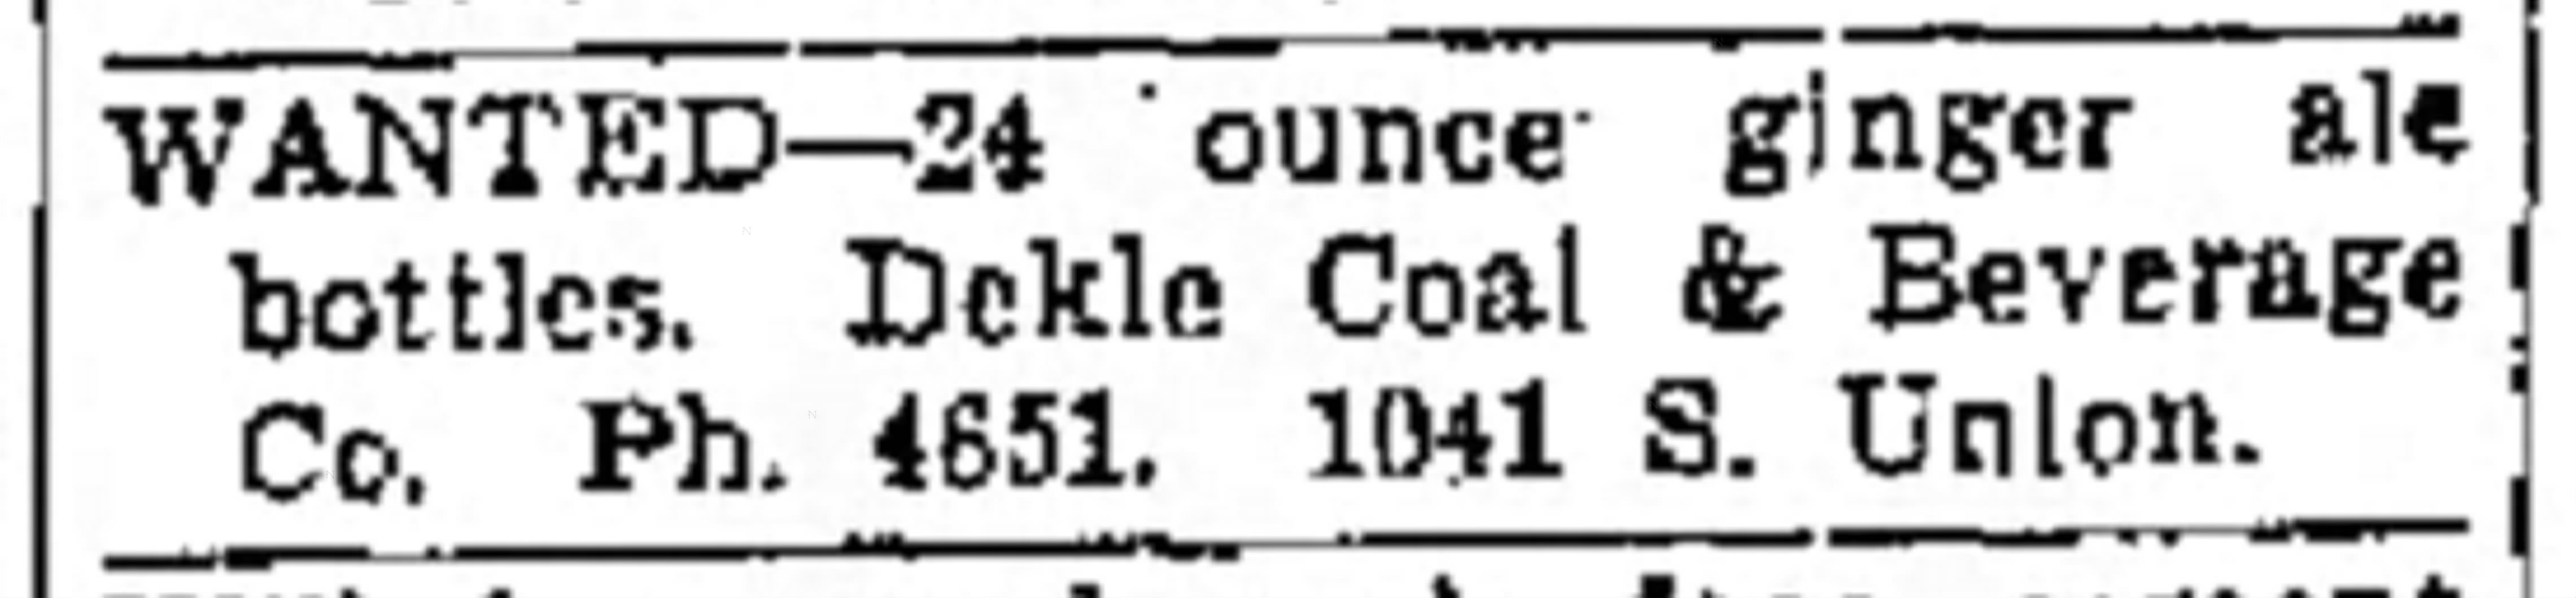 Dekle Coal & Beverage_The_Kokomo_Tribune_Indiana_Wed__Dec_1__1937.jpg